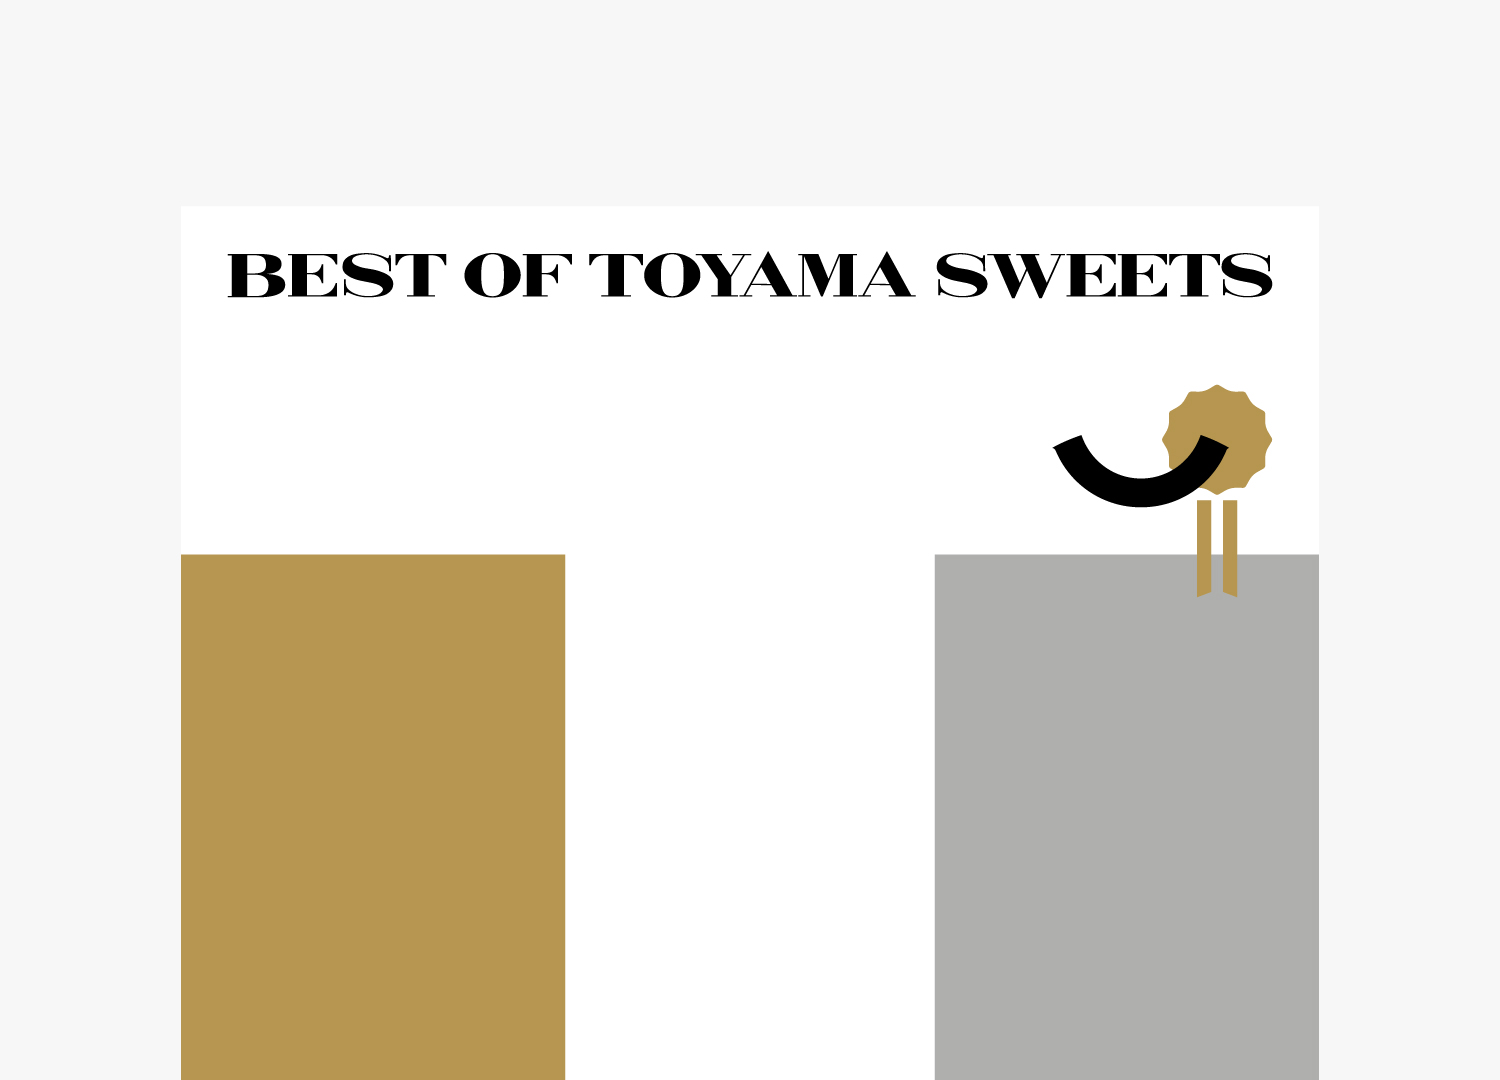 BEST OF TOYAMA SWEETS